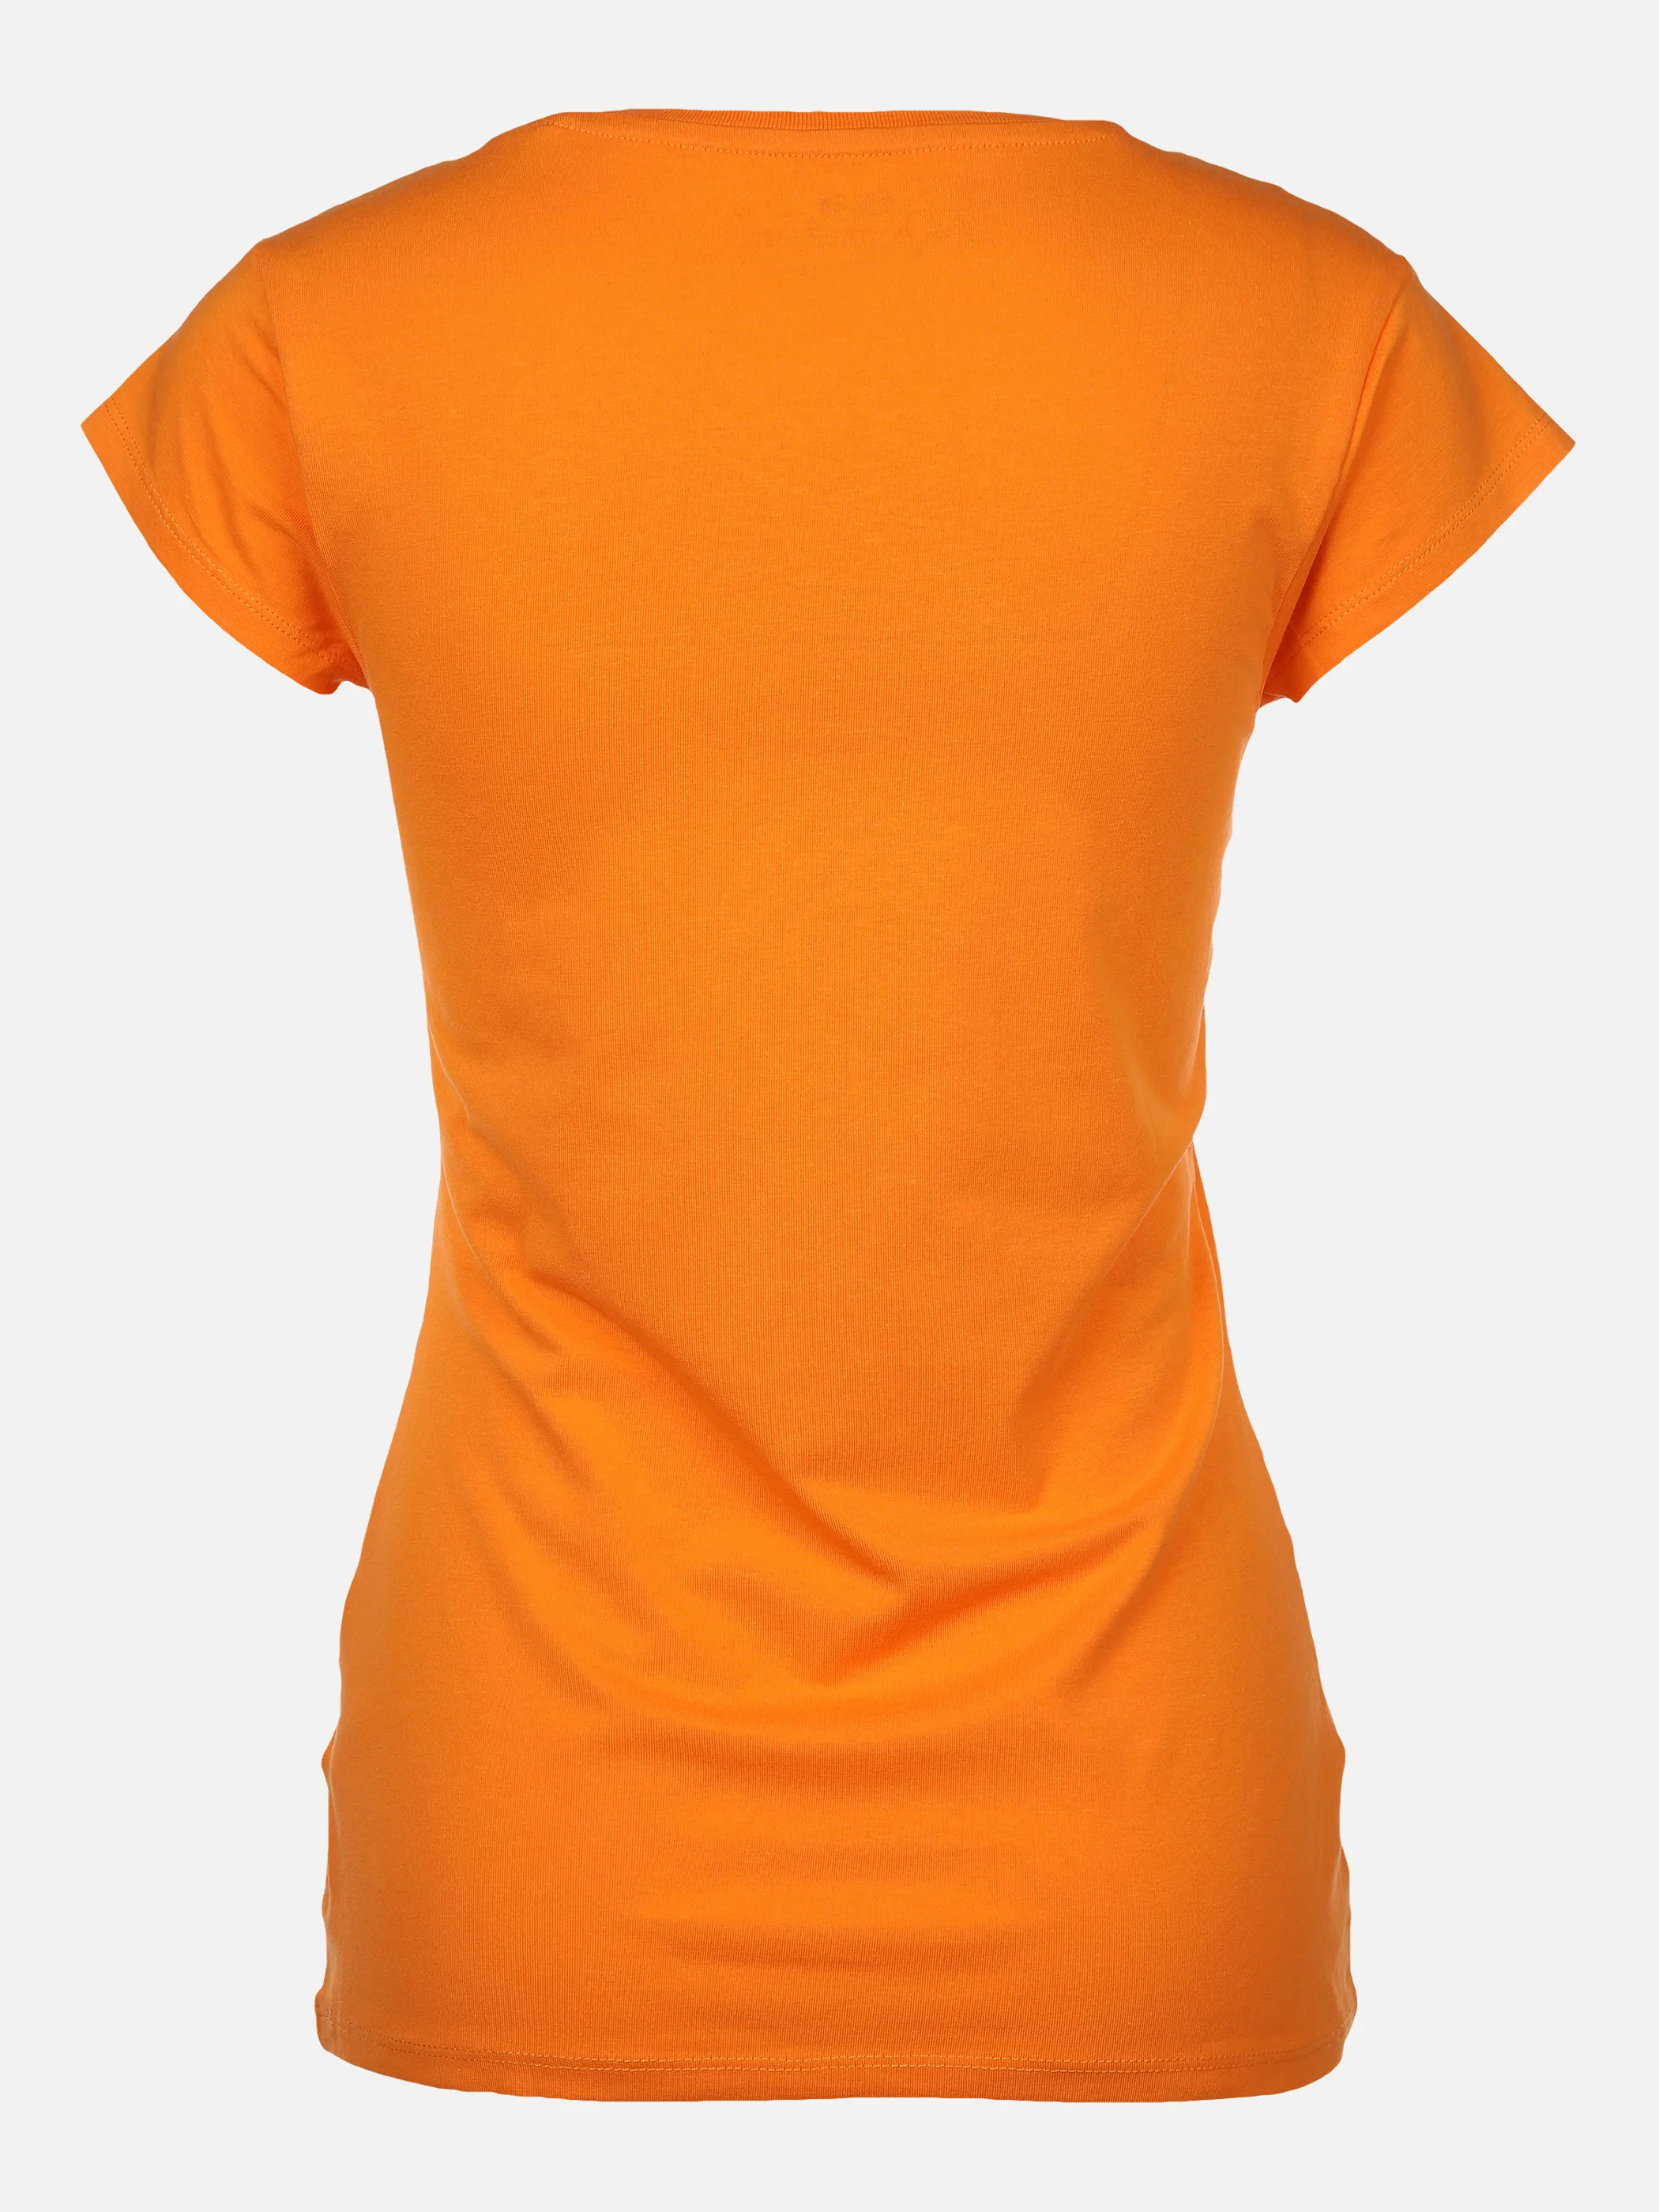 IX-O YF-Da-T-Shirt, Basic Orange 873780 ORANGE 2